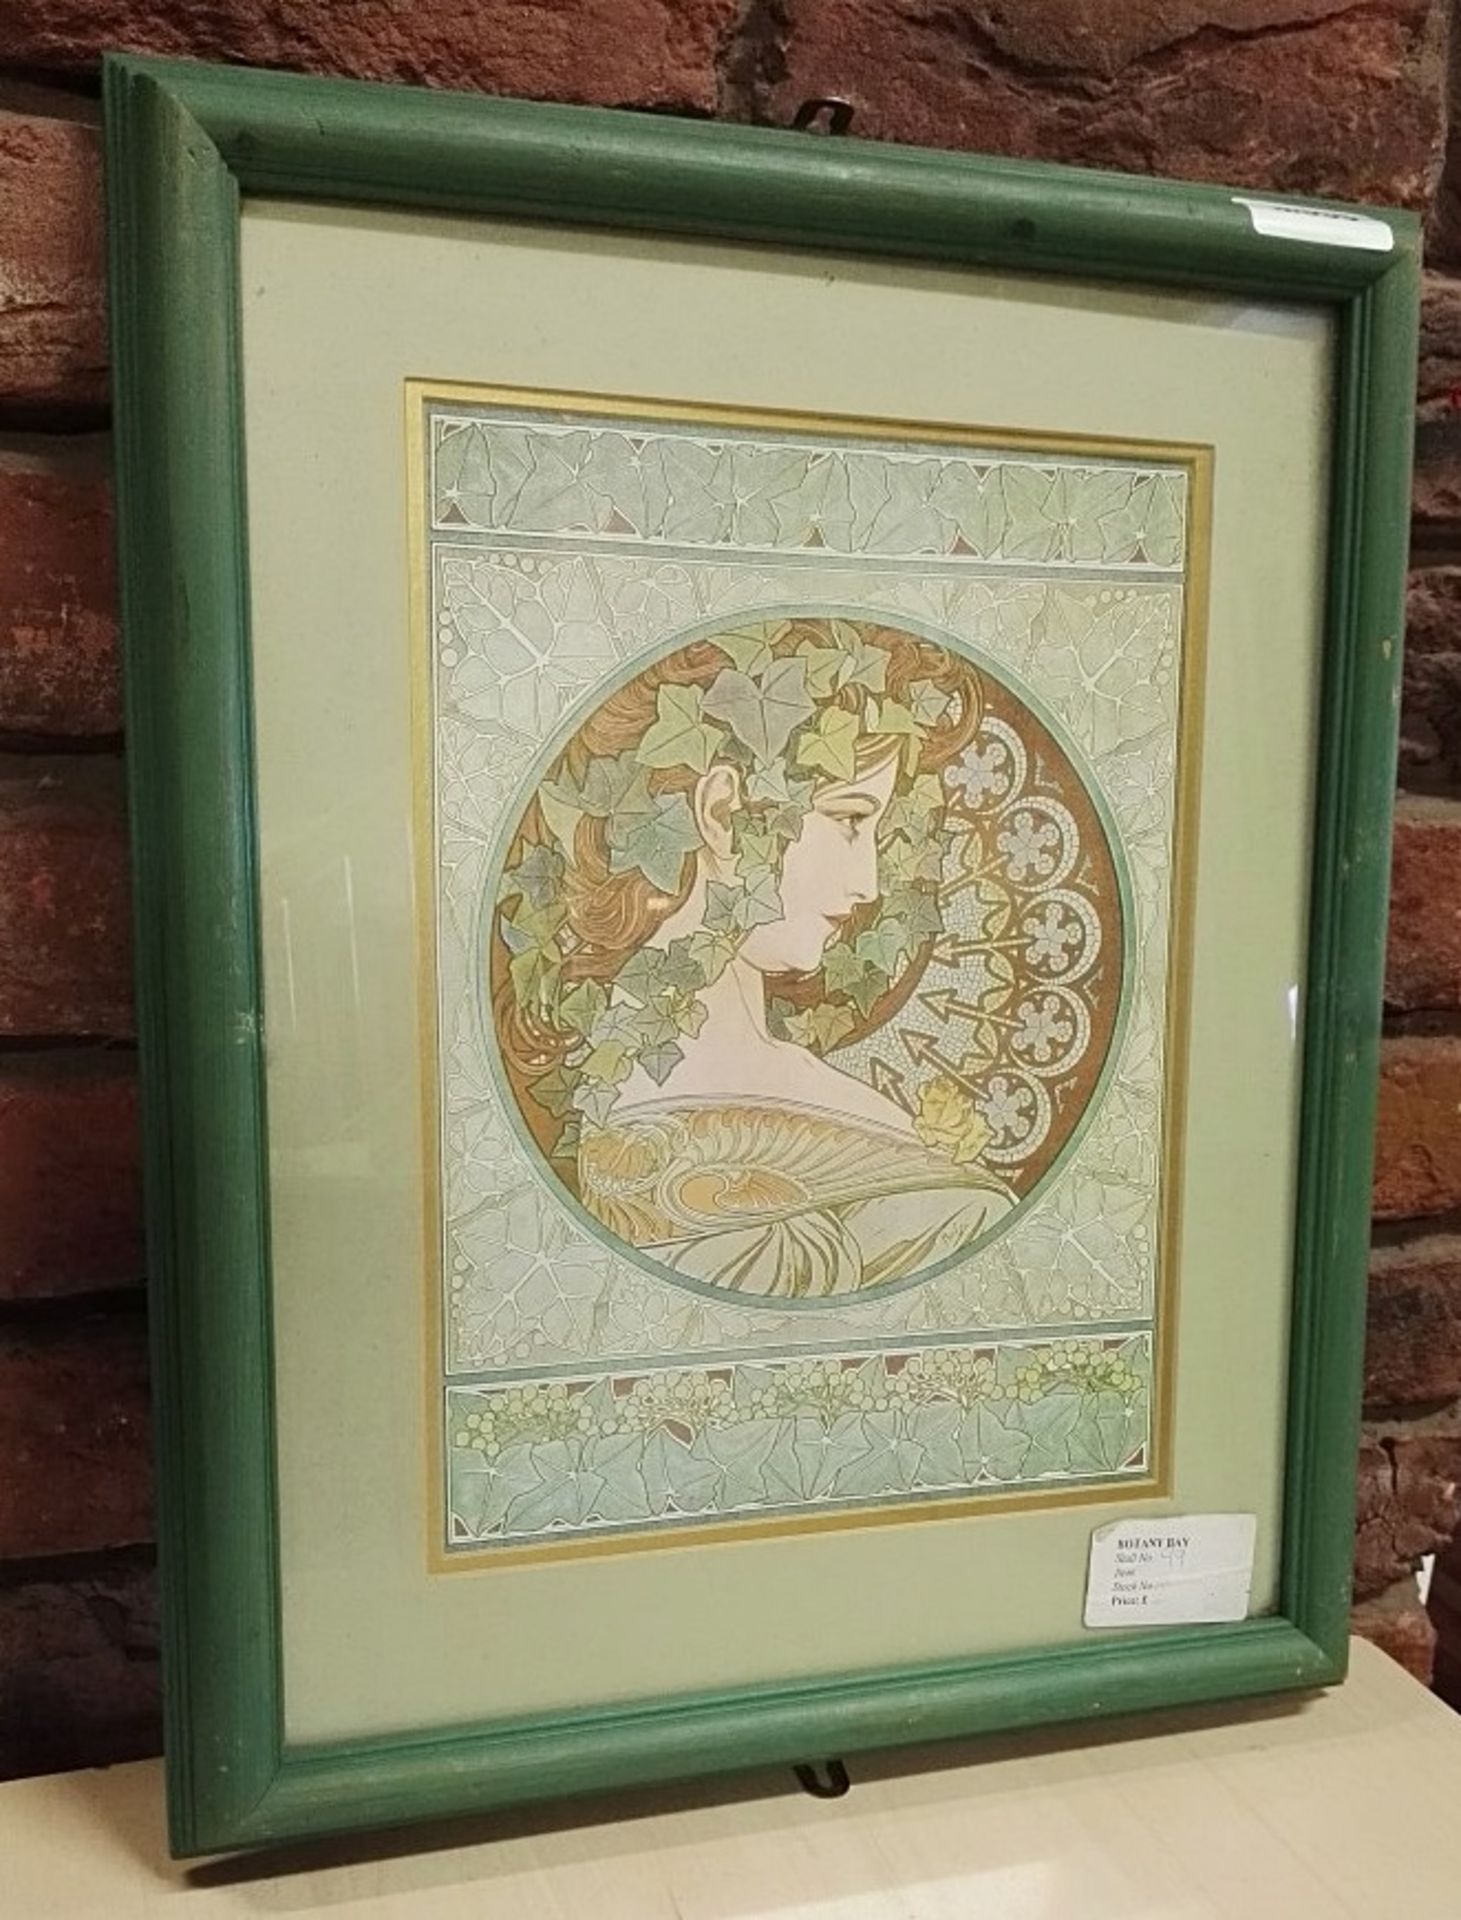 1 x Framed Print Of 'Ivy' By Alphonse Mucha - Ref M555 - Dimensions: H50 x 41cm - CL351